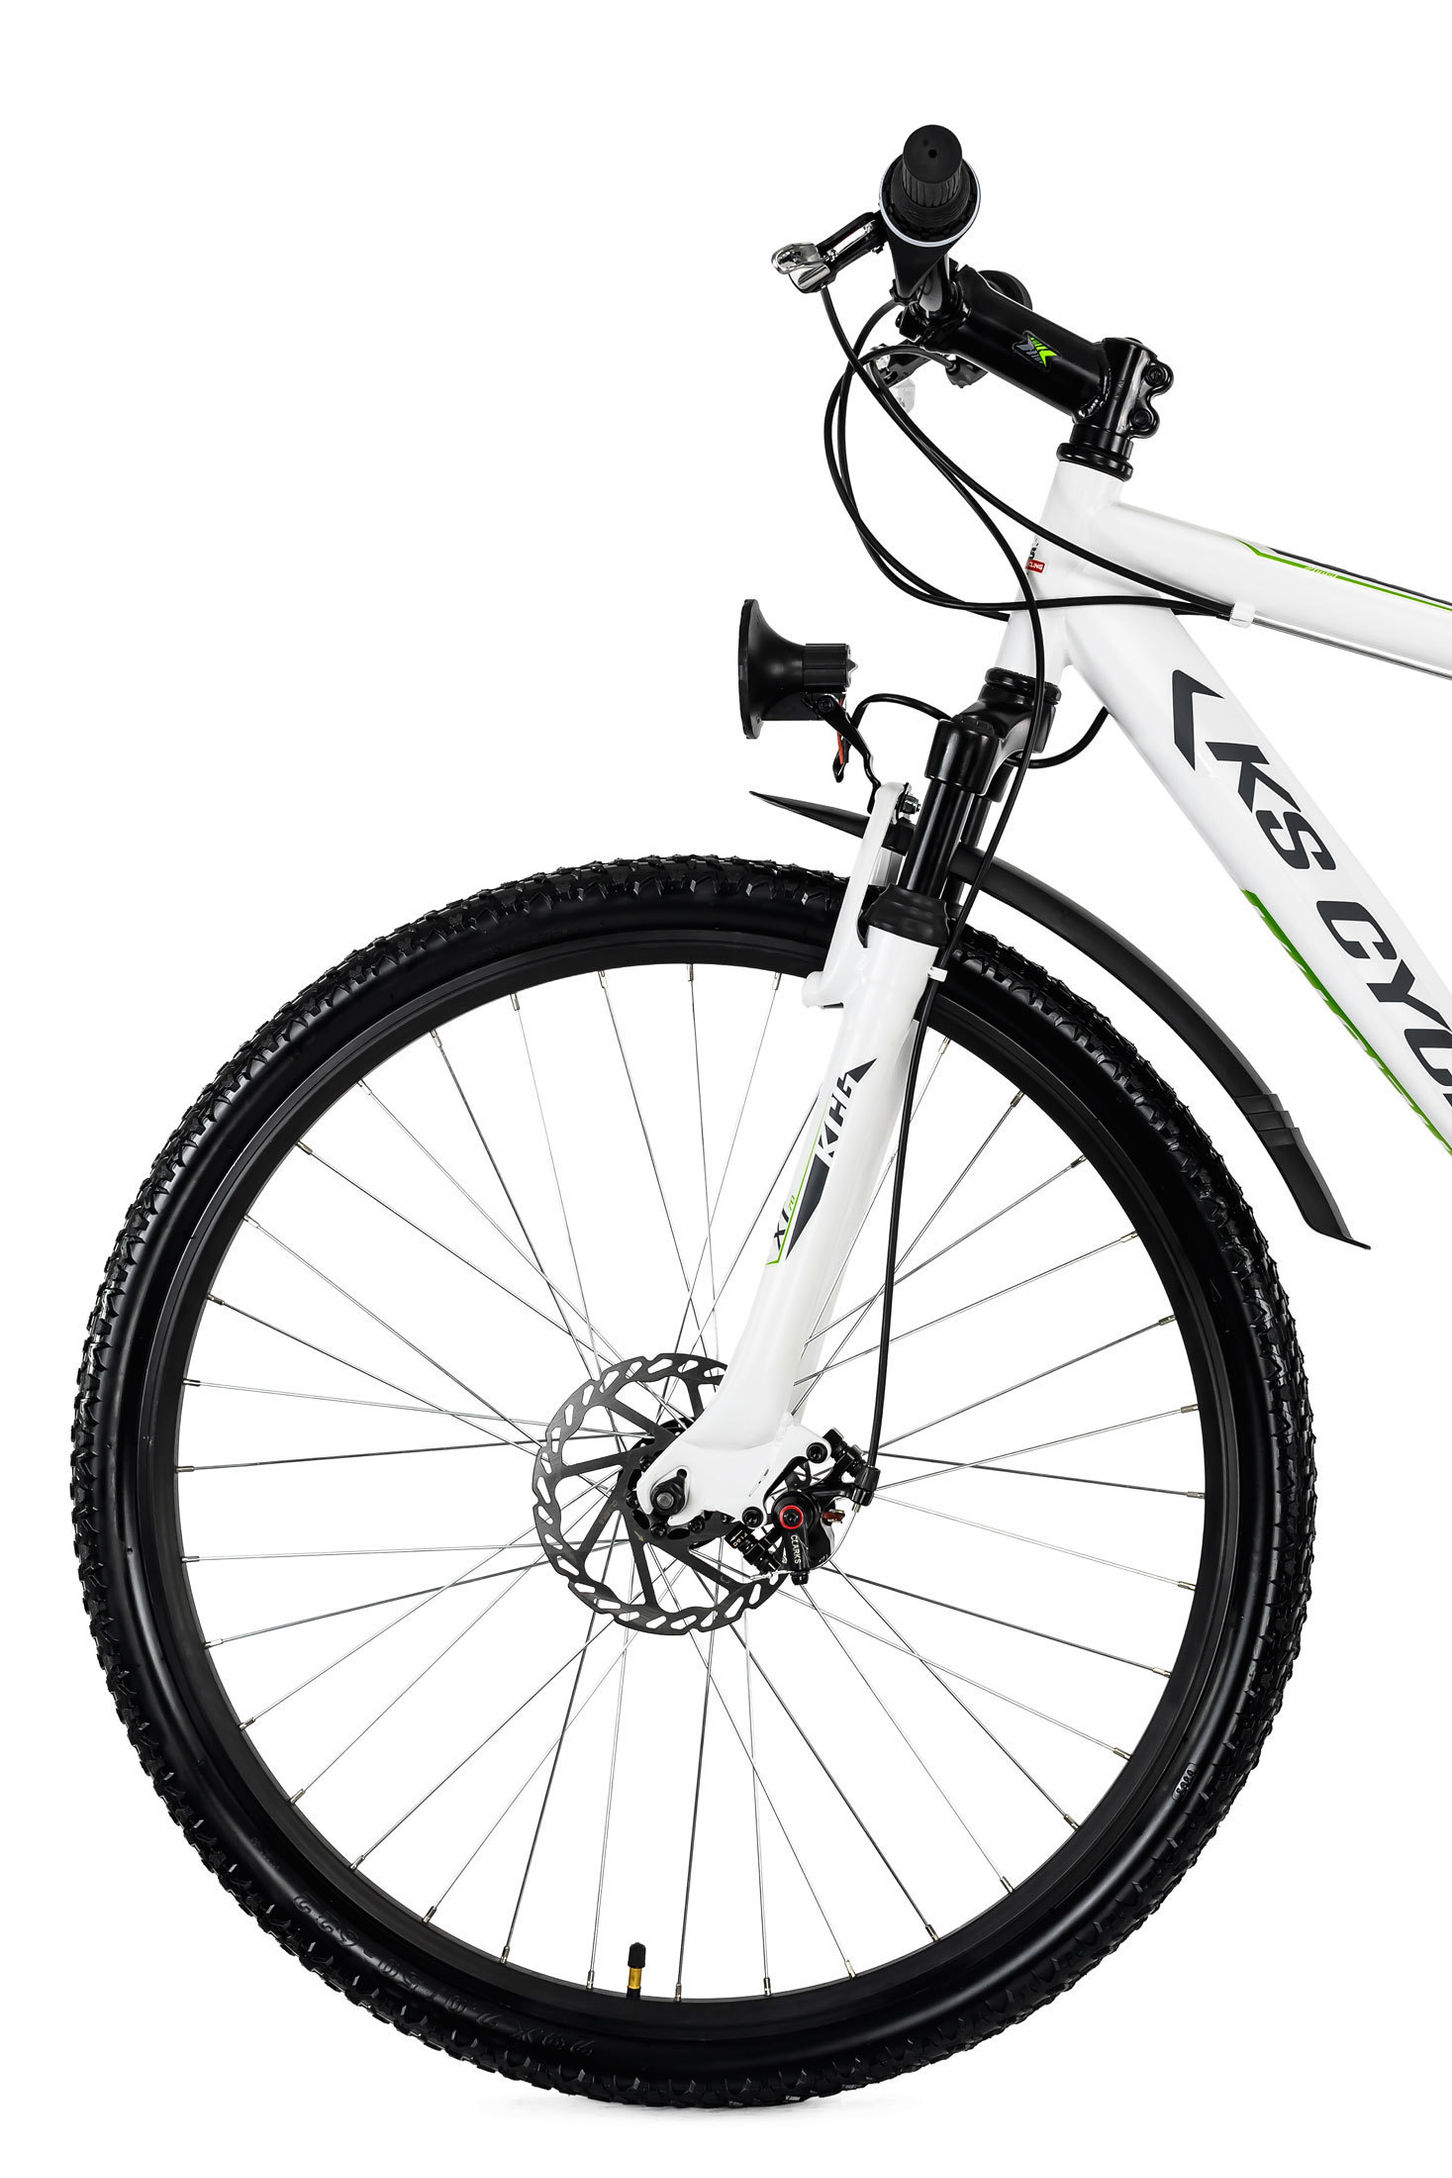 KS Cycling Mountainbike Hardtail ATB Twentyniner 29“ Heist weiß-grün weiß |  Weltbild.de